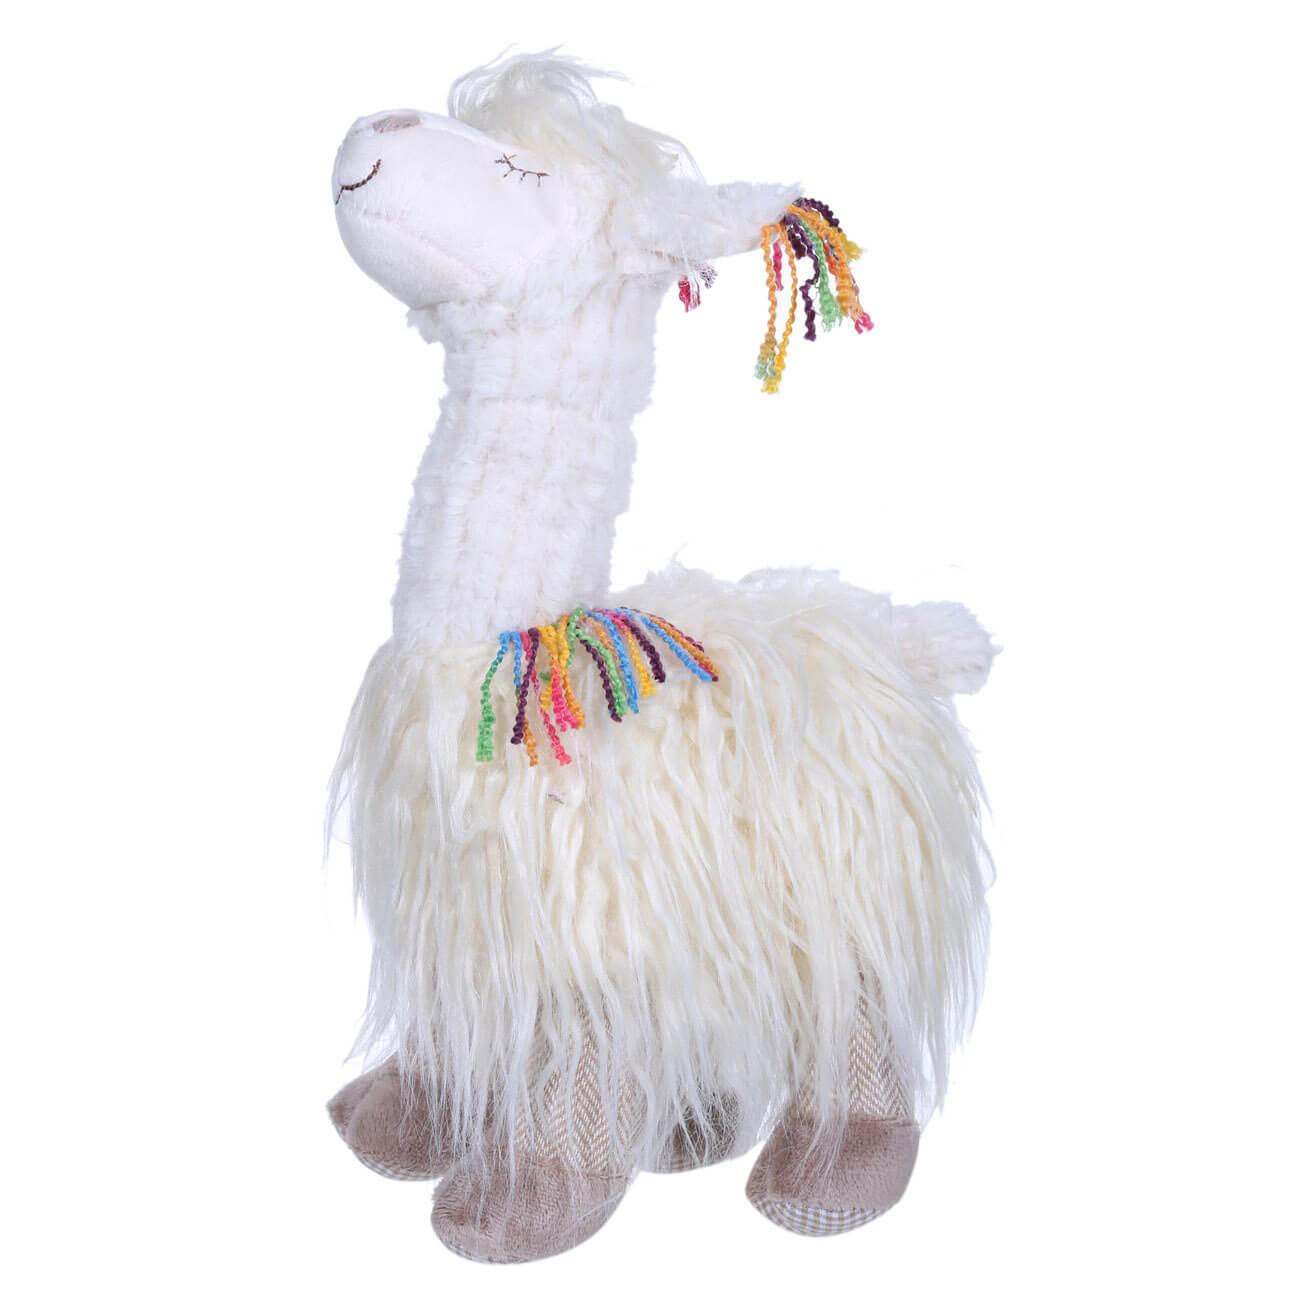 Игрушка декоративная, 34 см, полиэстер, мягкая, Лама, Lama игрушка 49 см мягкая полиэстер бело бежевая лама lama